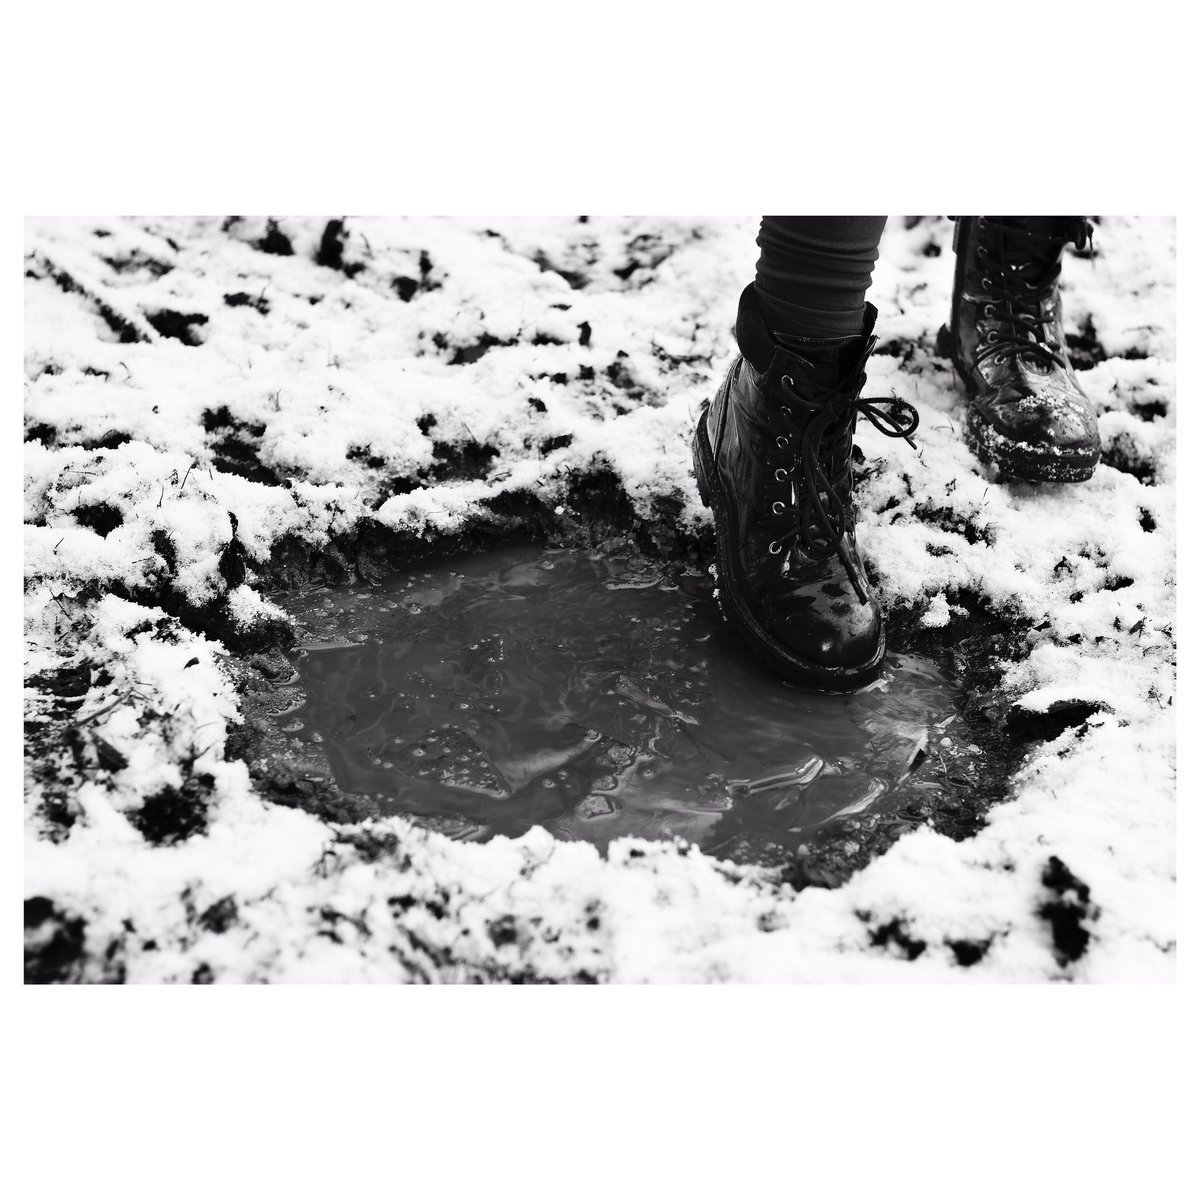 Winter walk ... #Scotland #glasgow #Documentary #blackandwhitephotography #balckandwhite #winter #snow #winterwalk #freezing #afternoon #photography #Monochrome #photo